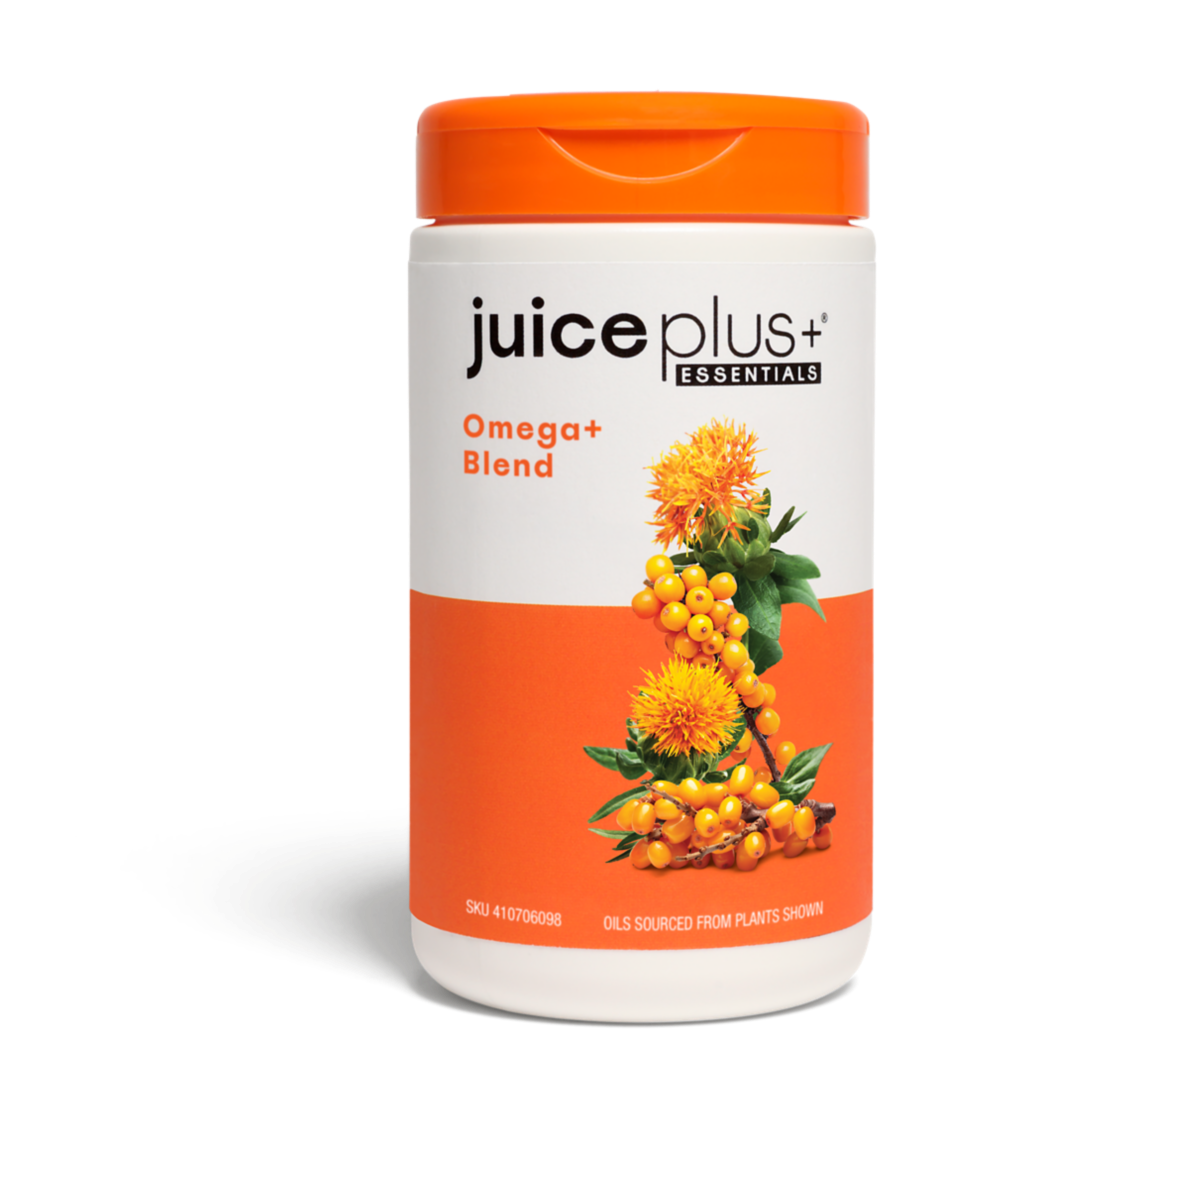 Juice Plus Omegas. Omega Blend Standard. Eleneon Plus. Омега плюс фото. Plants plus